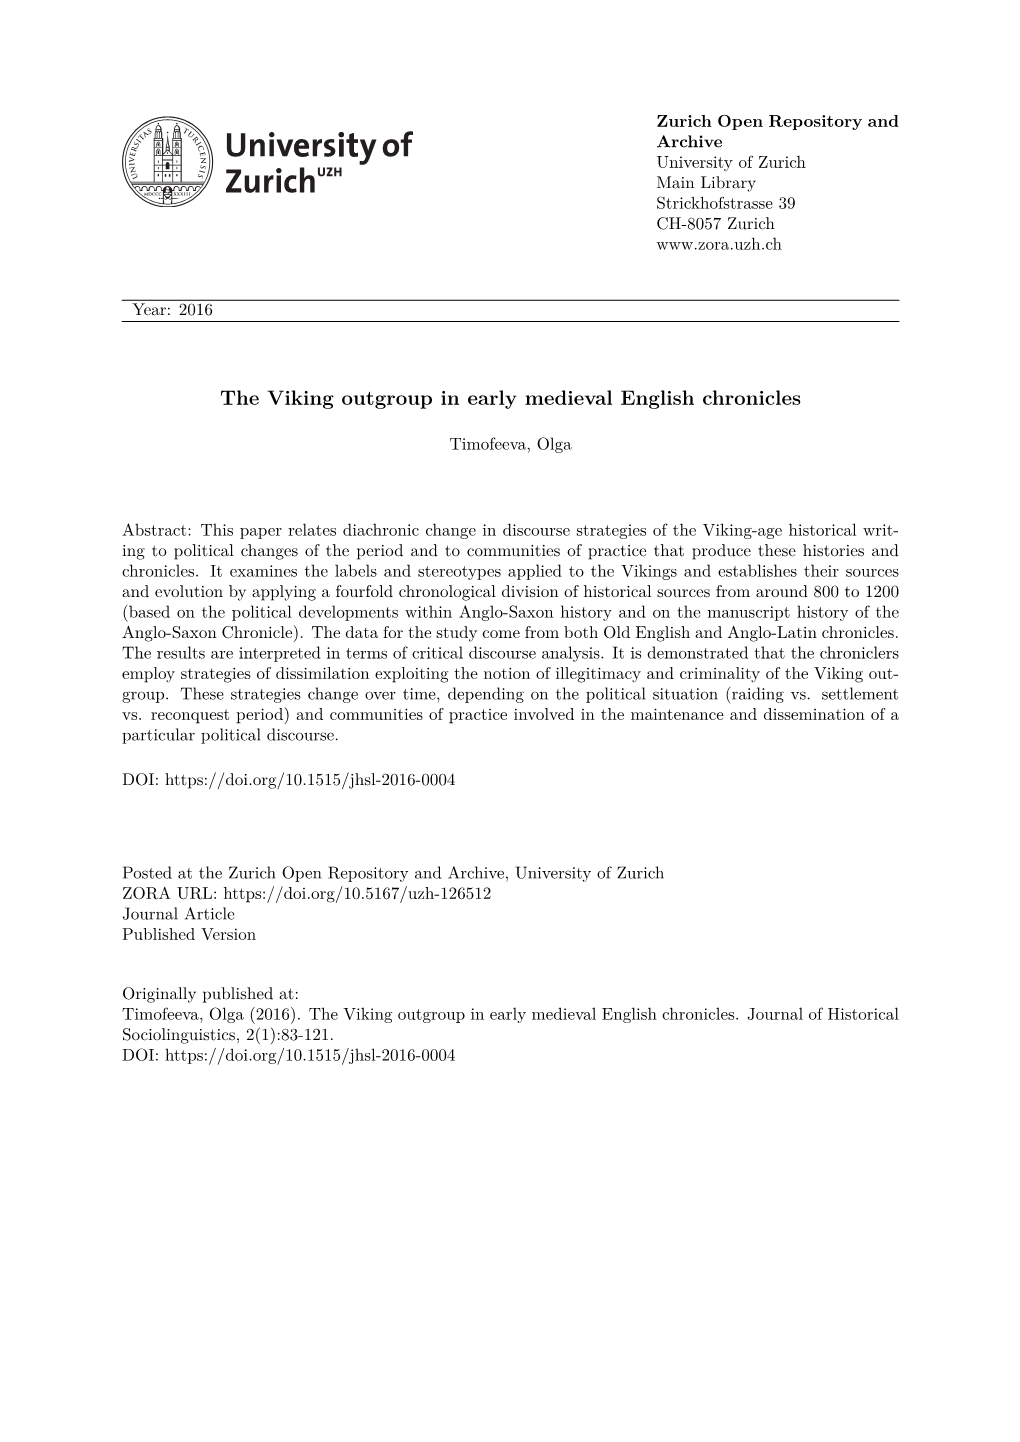 Journal of Historical Sociolinguistics, 2(1):83-121